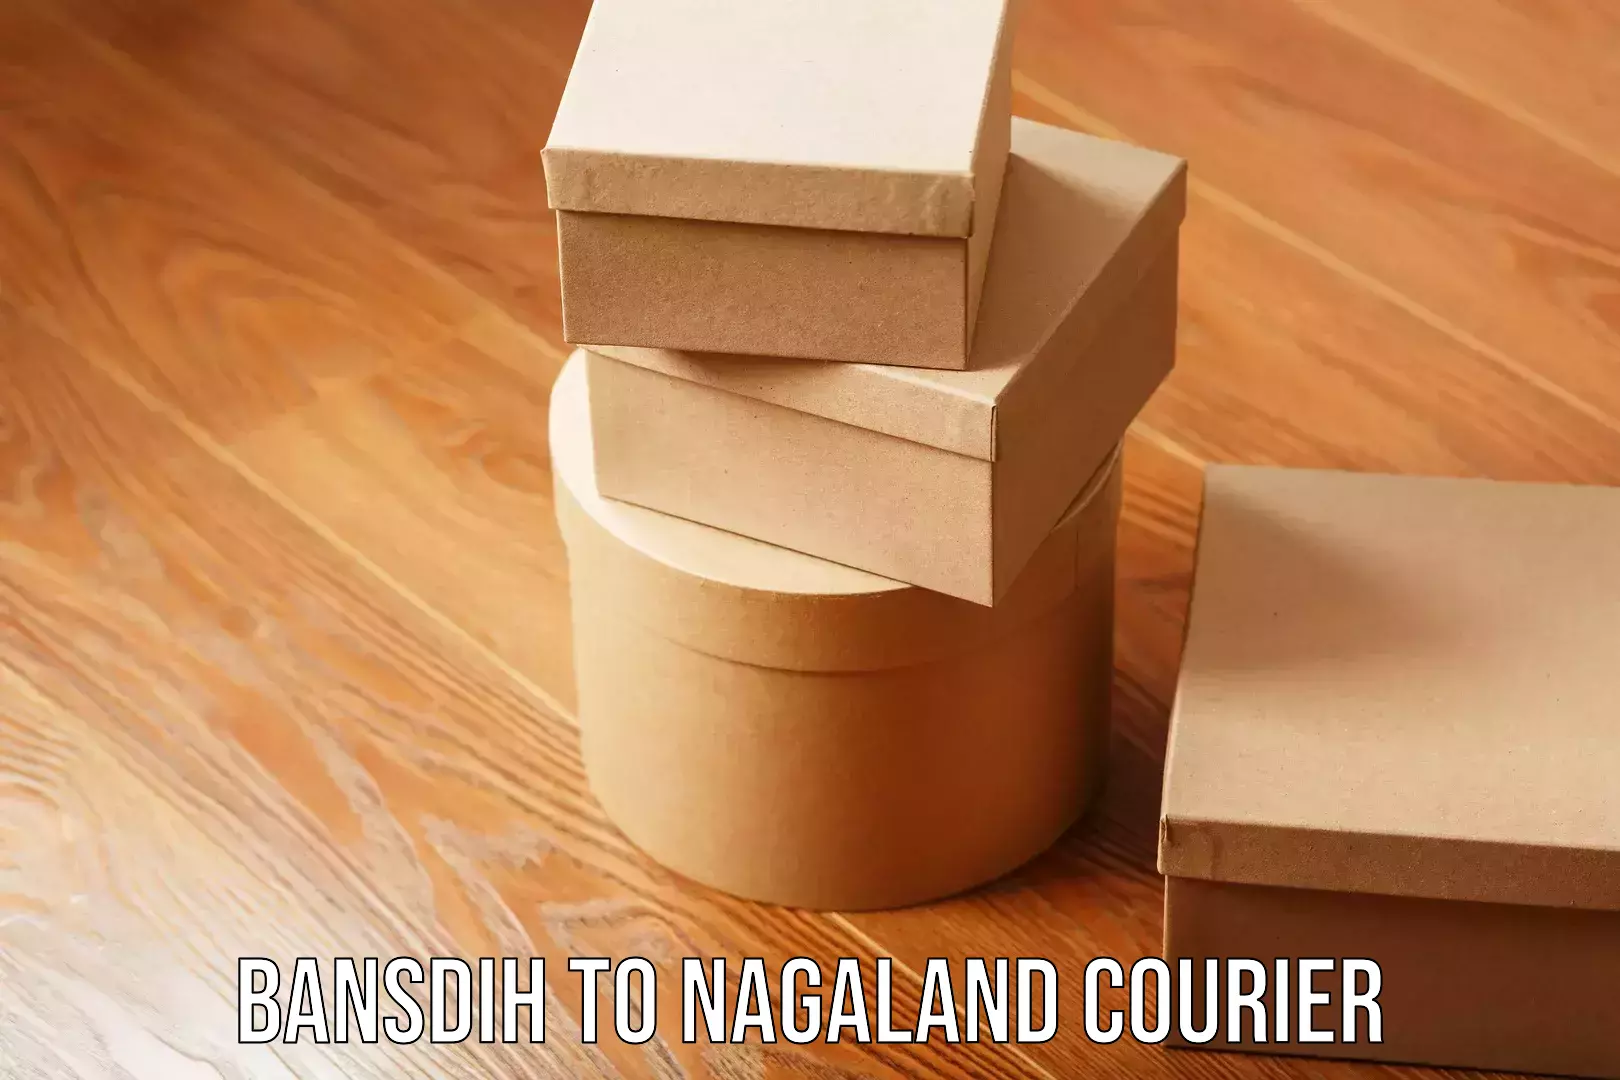 Express delivery capabilities Bansdih to Nagaland